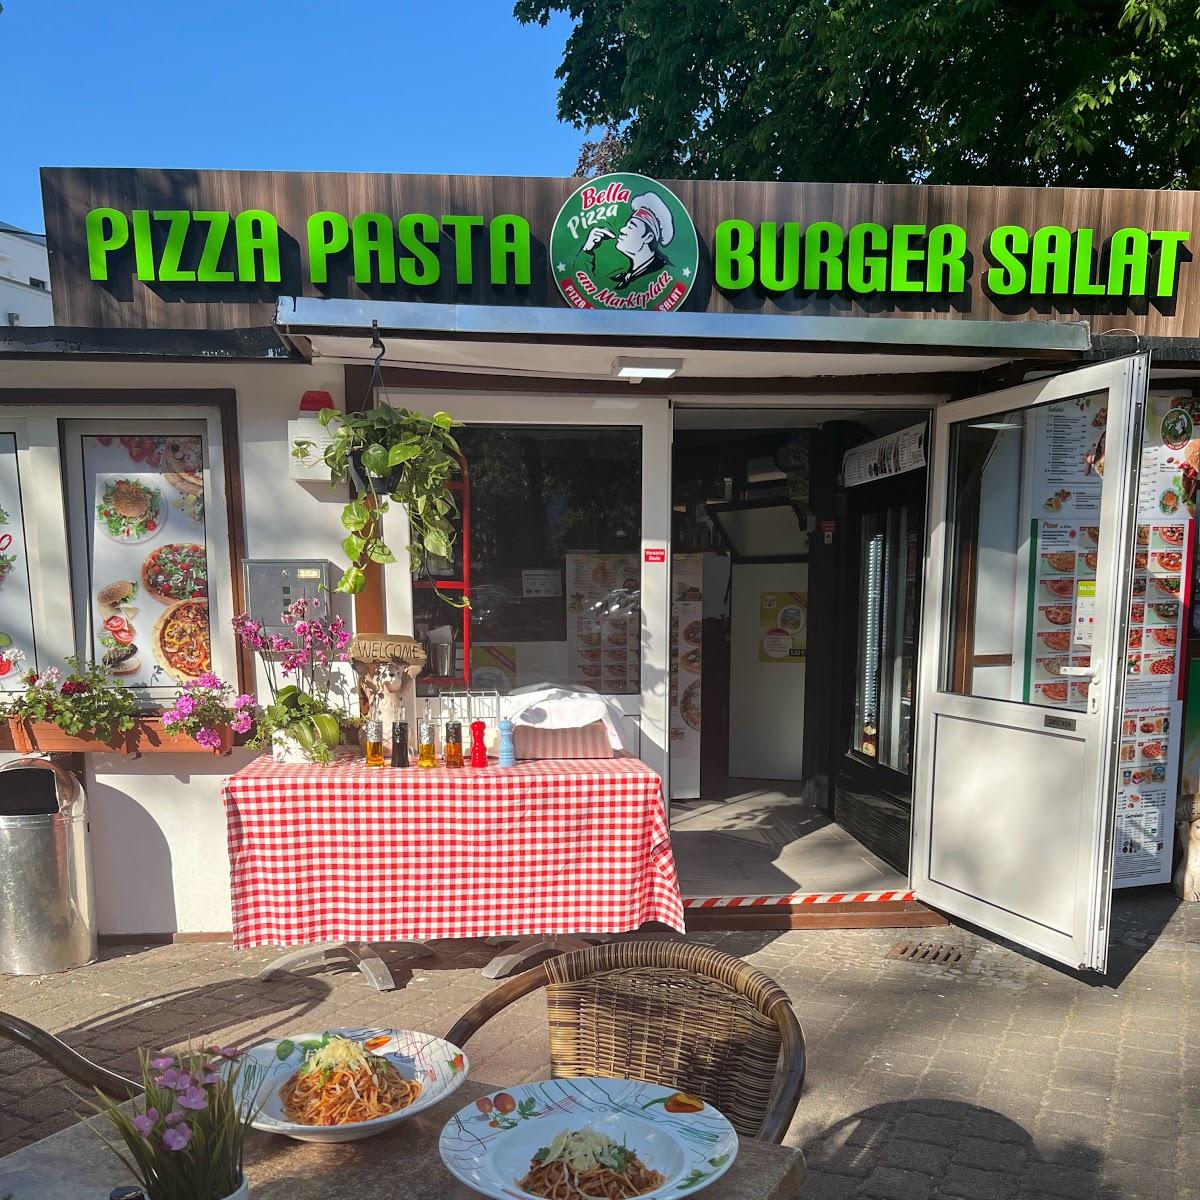 Restaurant "Bella Pizza am Marktplatz" in Berlin